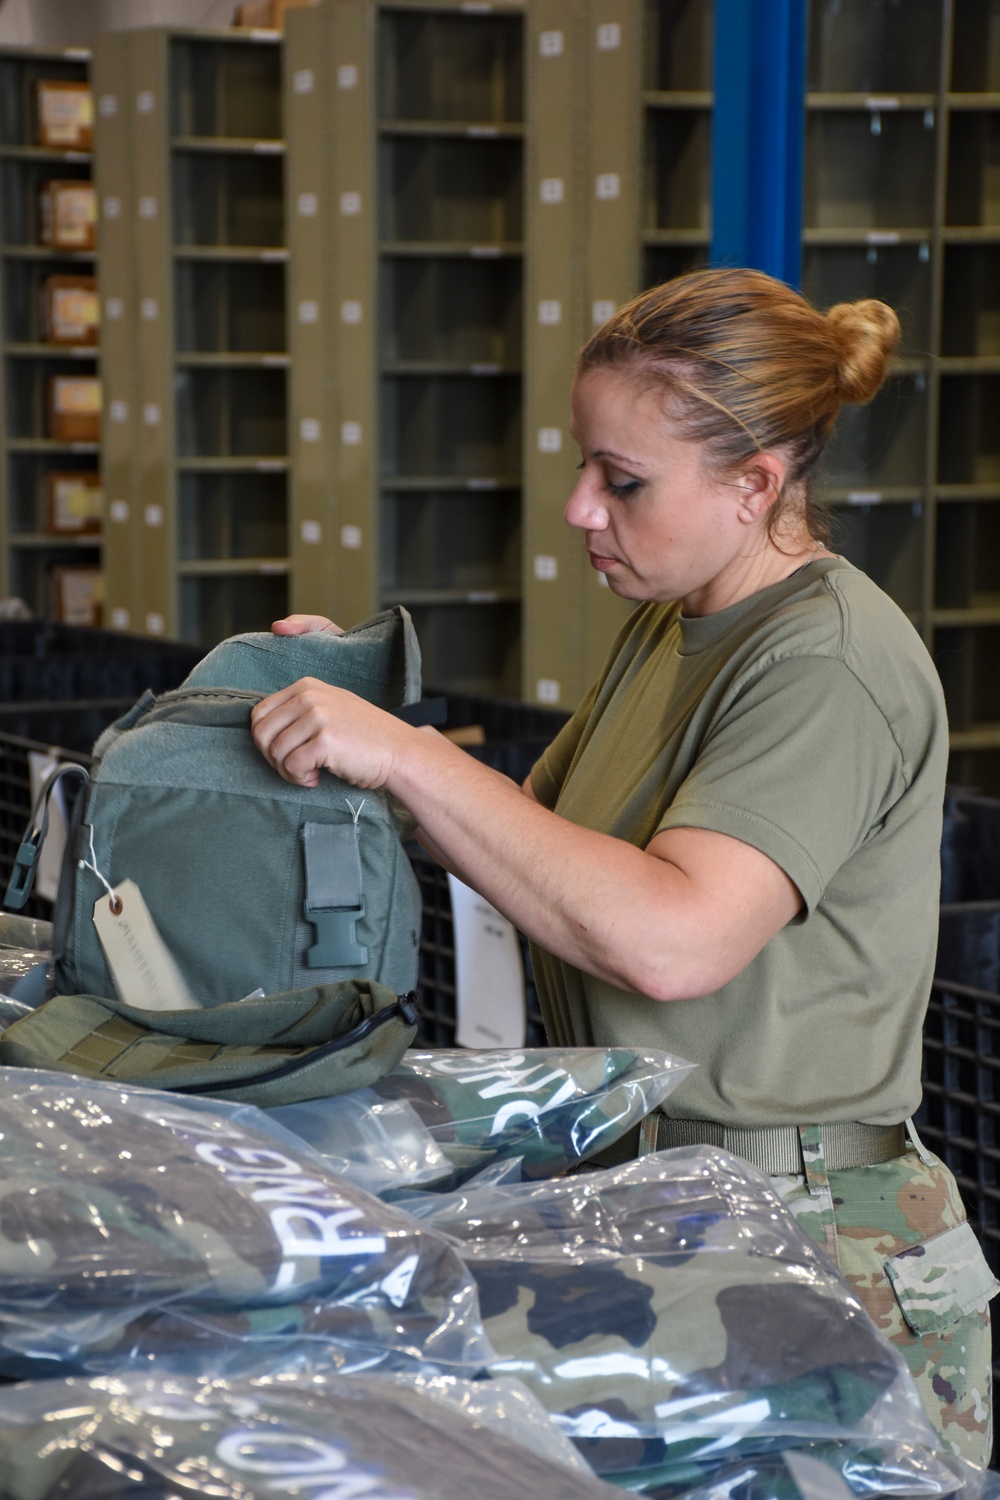 442d Logistics Readiness Squadron creates new organization system for chem gear